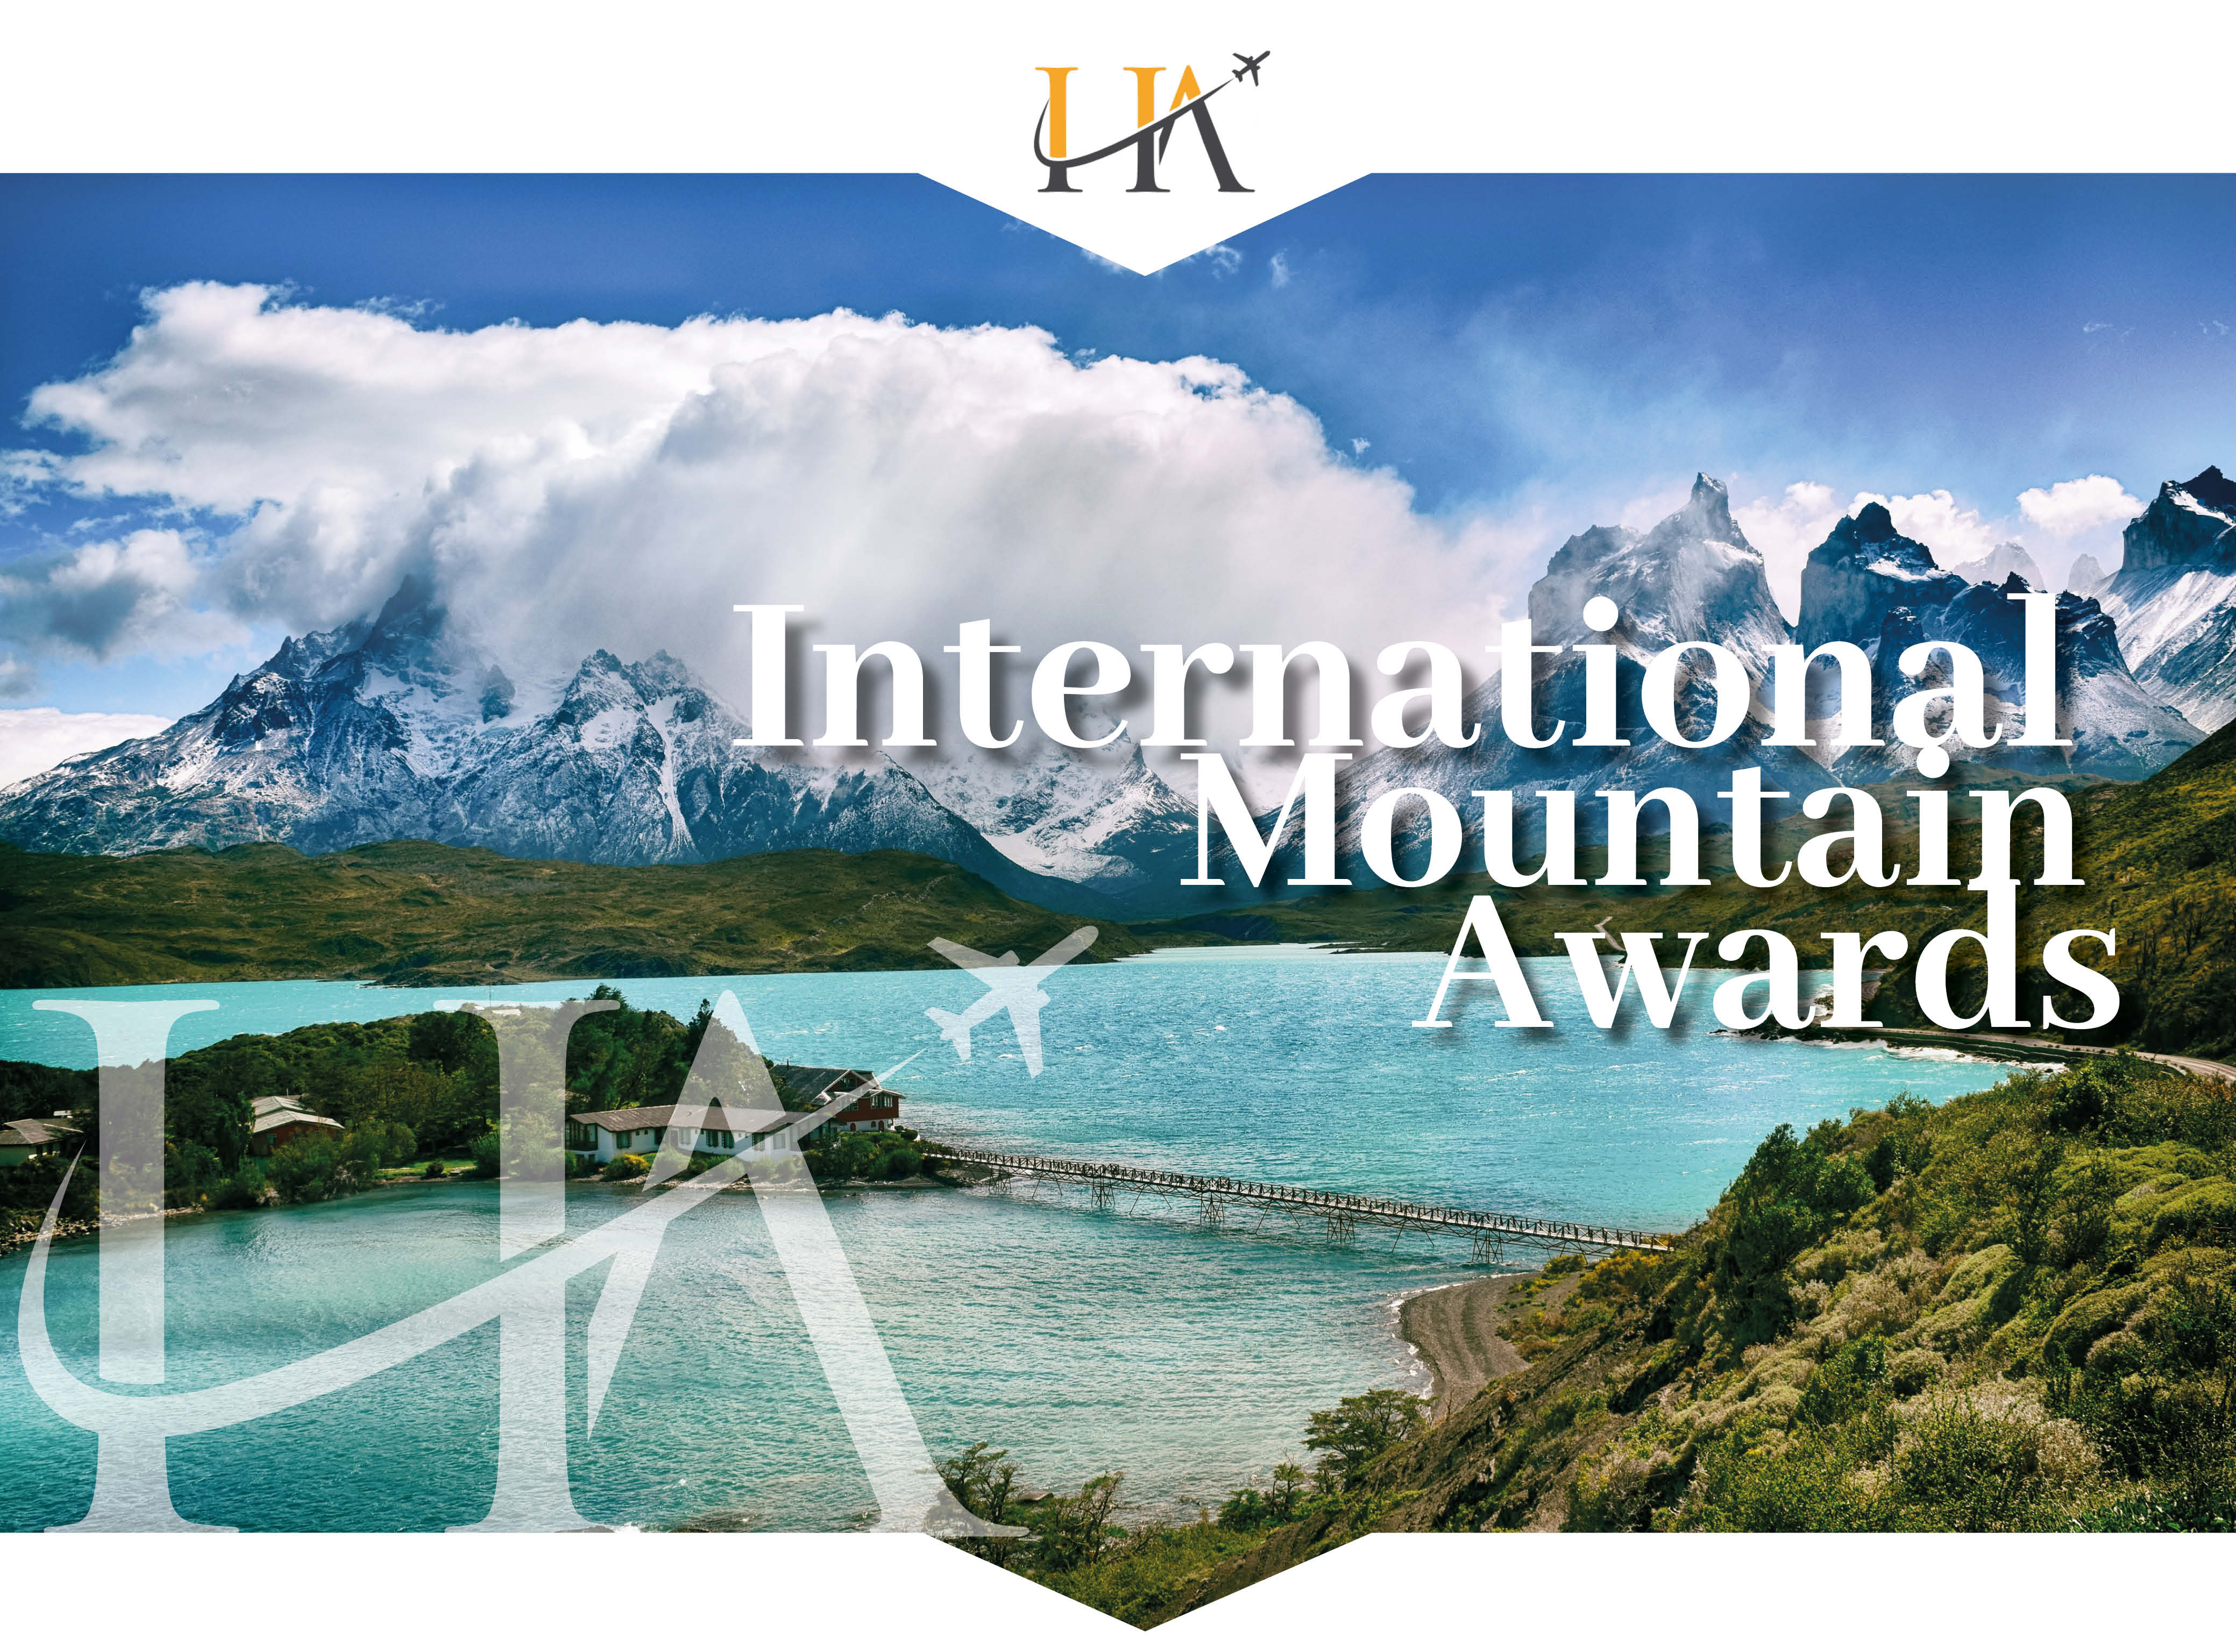 International Mountain Awards